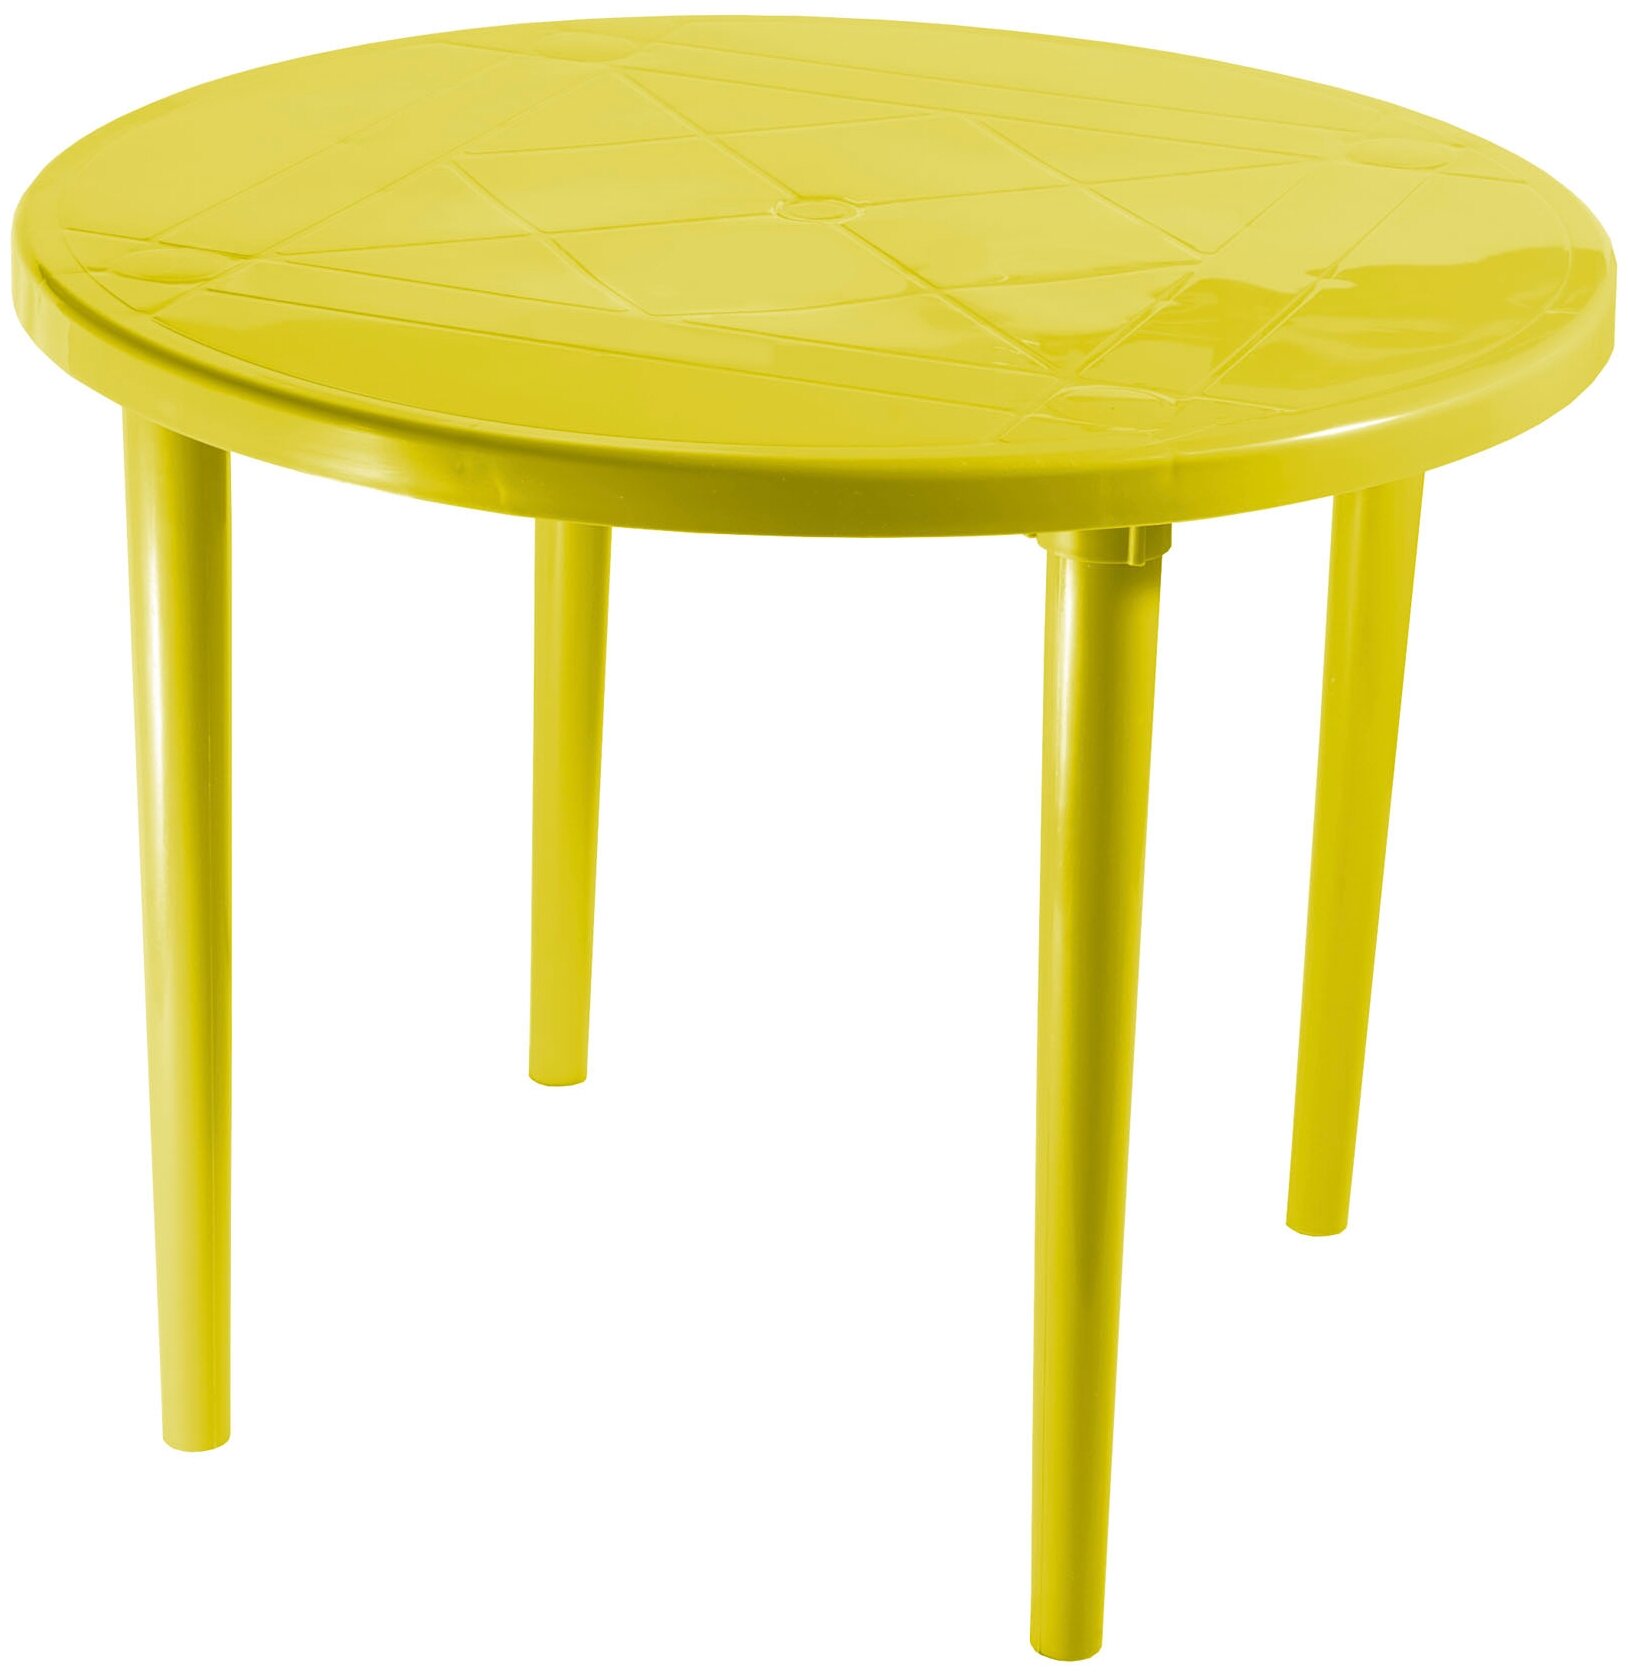 Стол круглый пластиковый 130-0022, диаметр 900мм, цвет желтый